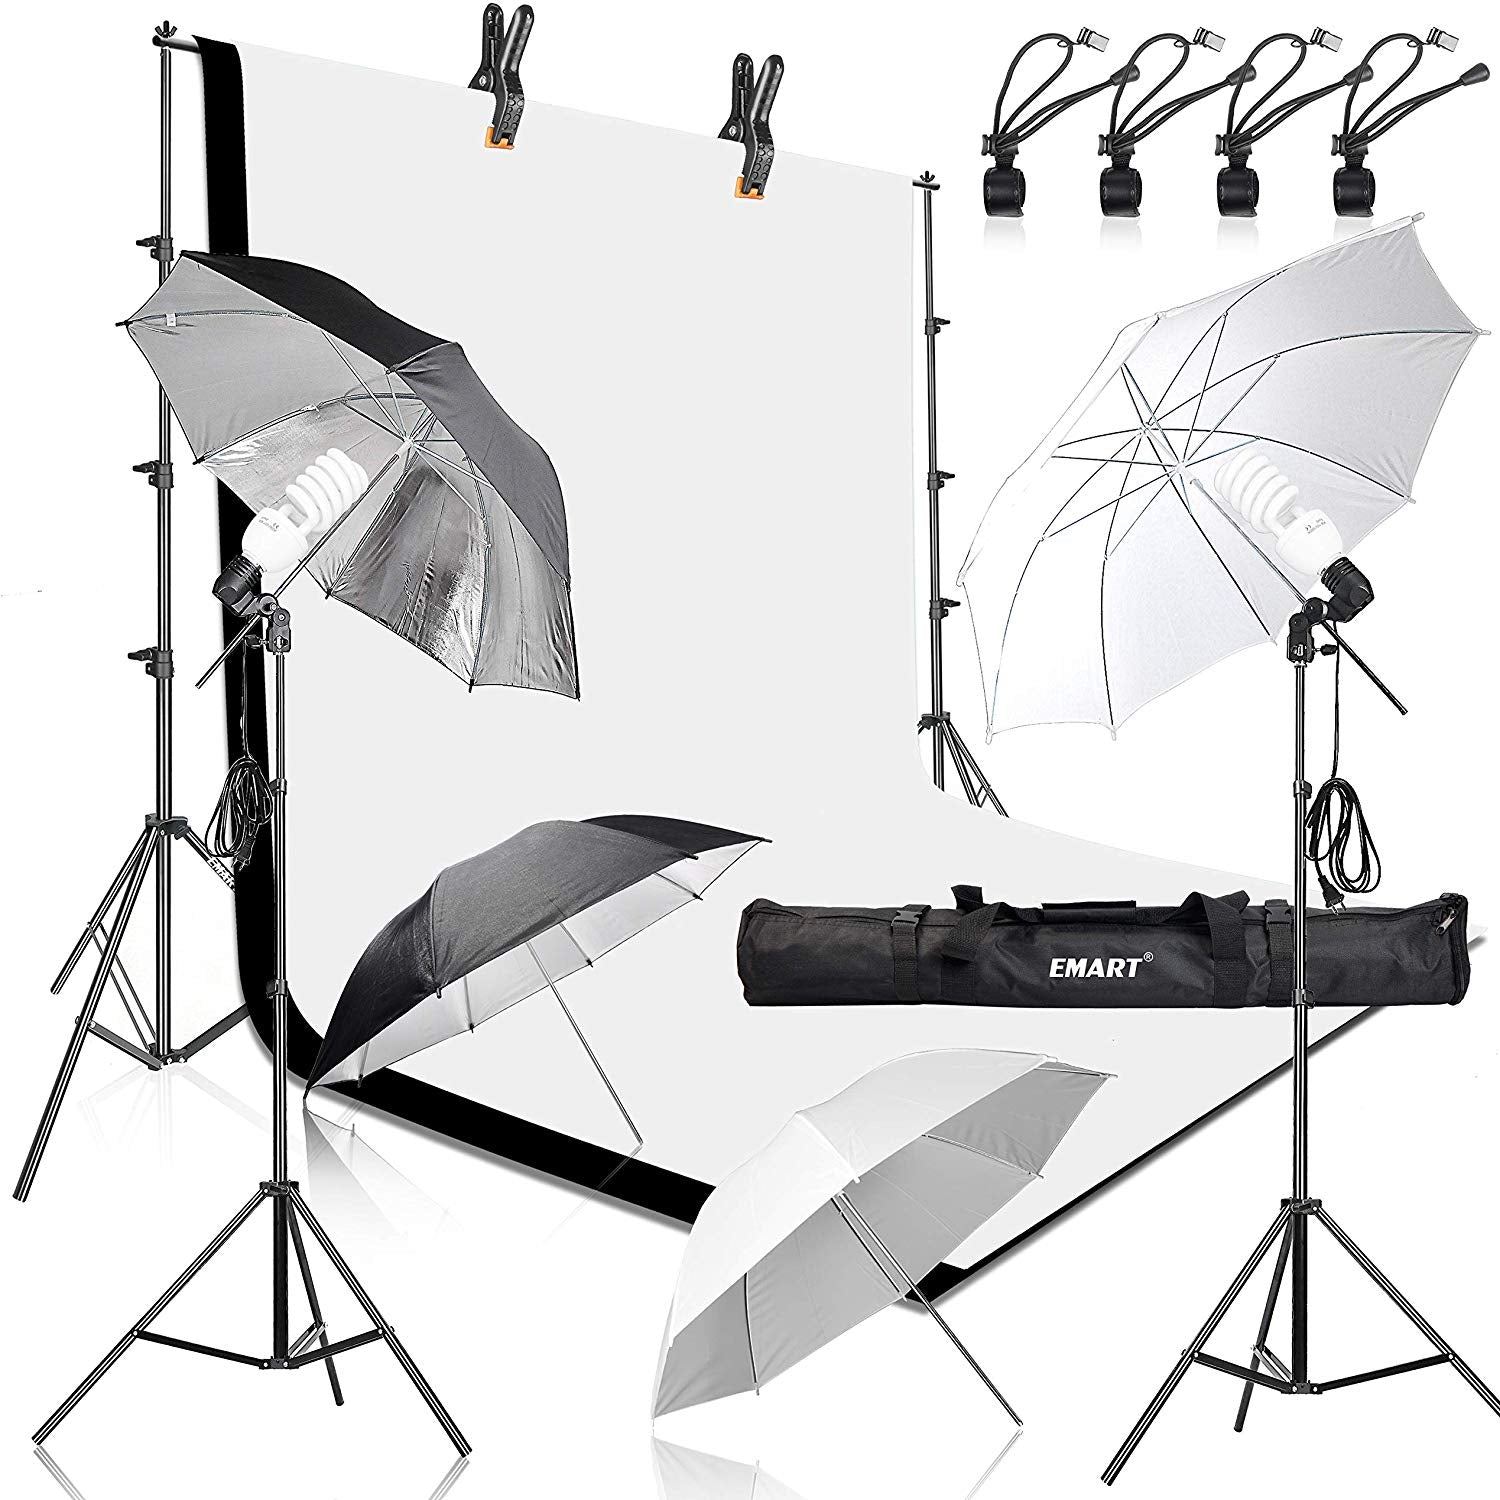 8.5 x 10 ft Stand Kit with 400W 5500K Umbrella Lighting Set, Black/White Backdrop